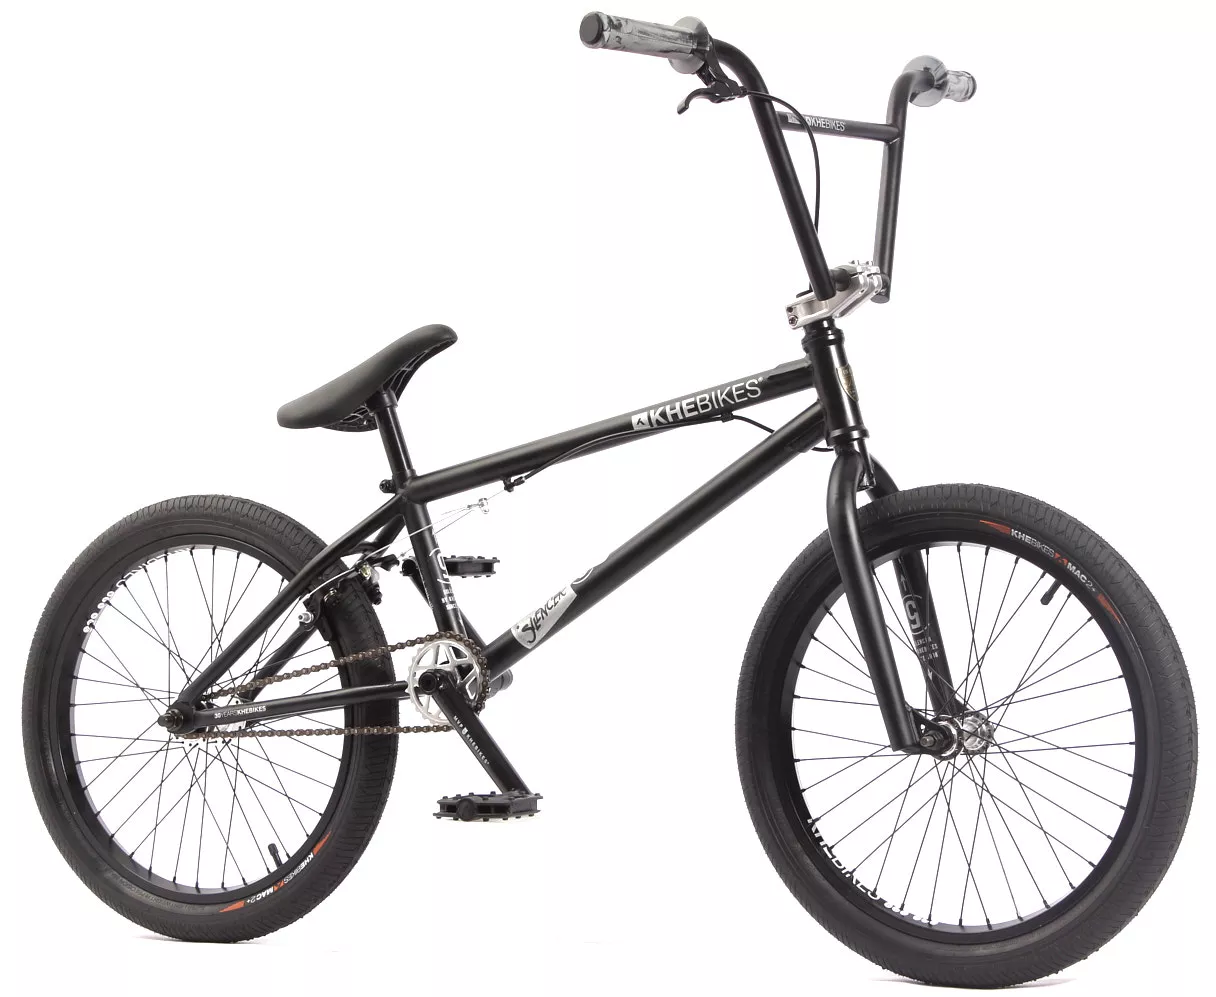 Outlet N3 : BMX bike KHE SILENCER LT 20 inch 21.8lbs